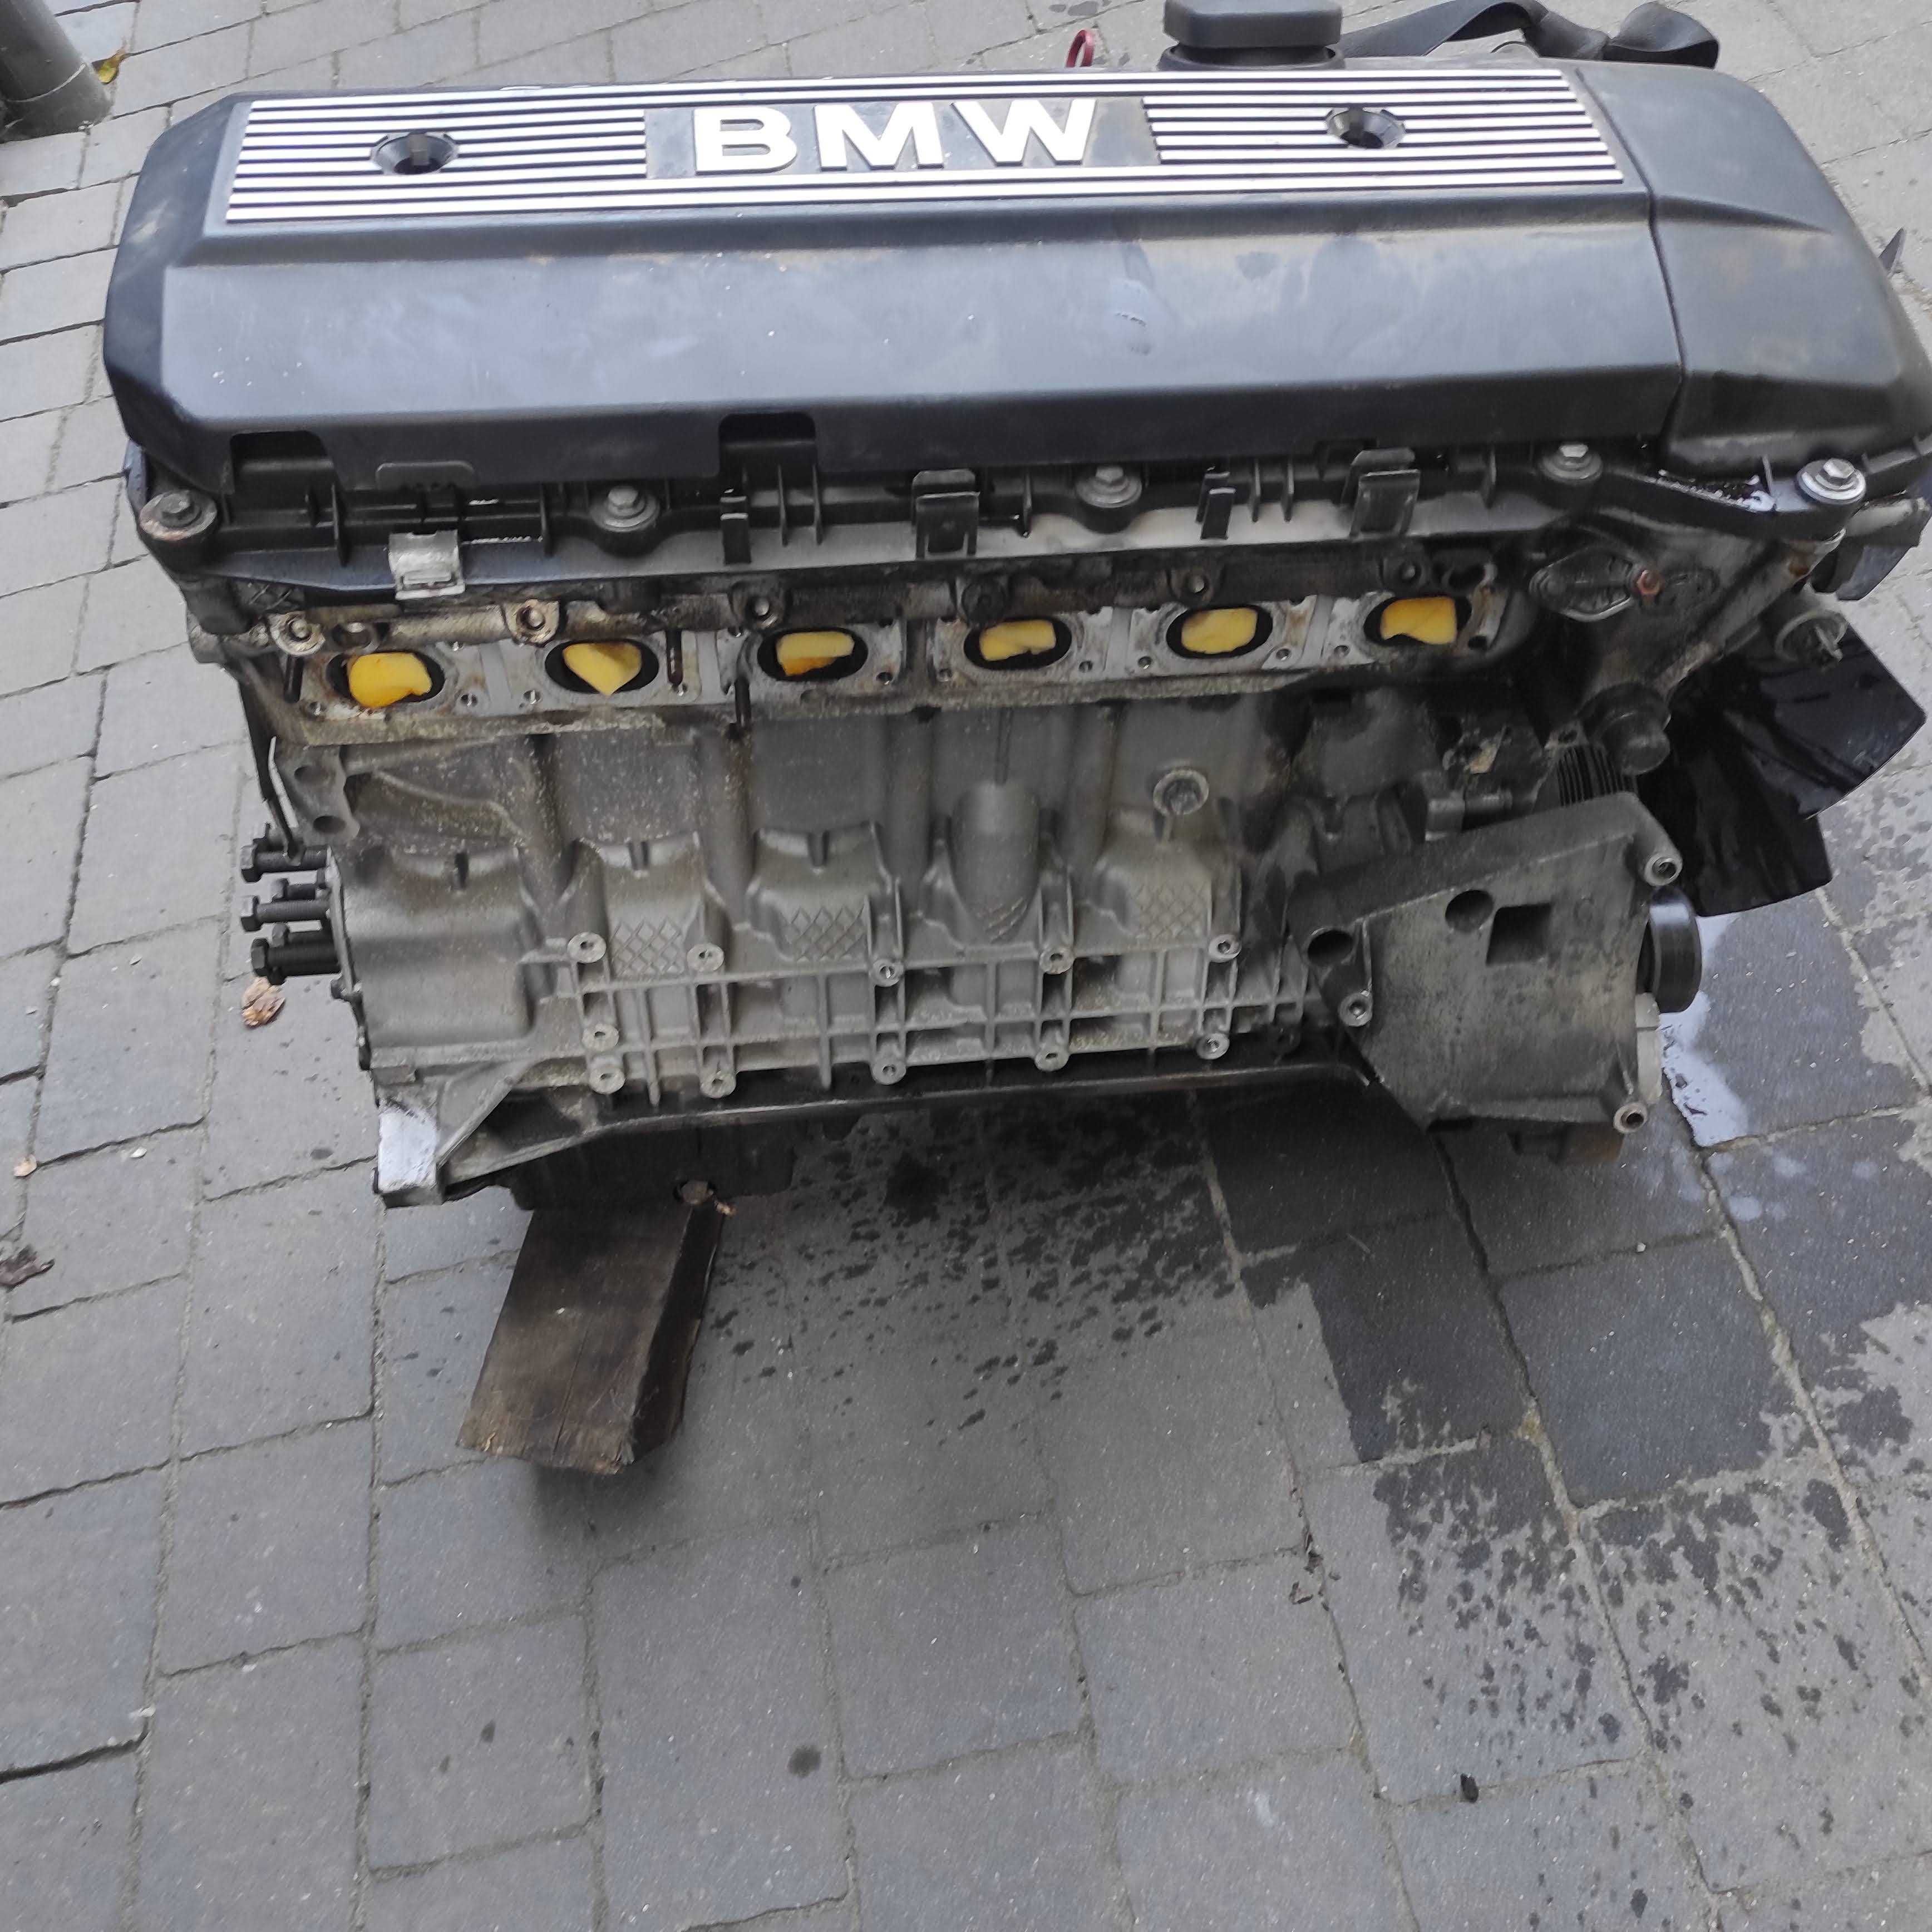 Silnik BMW 5 E 39 2,0 M52 20 6S4